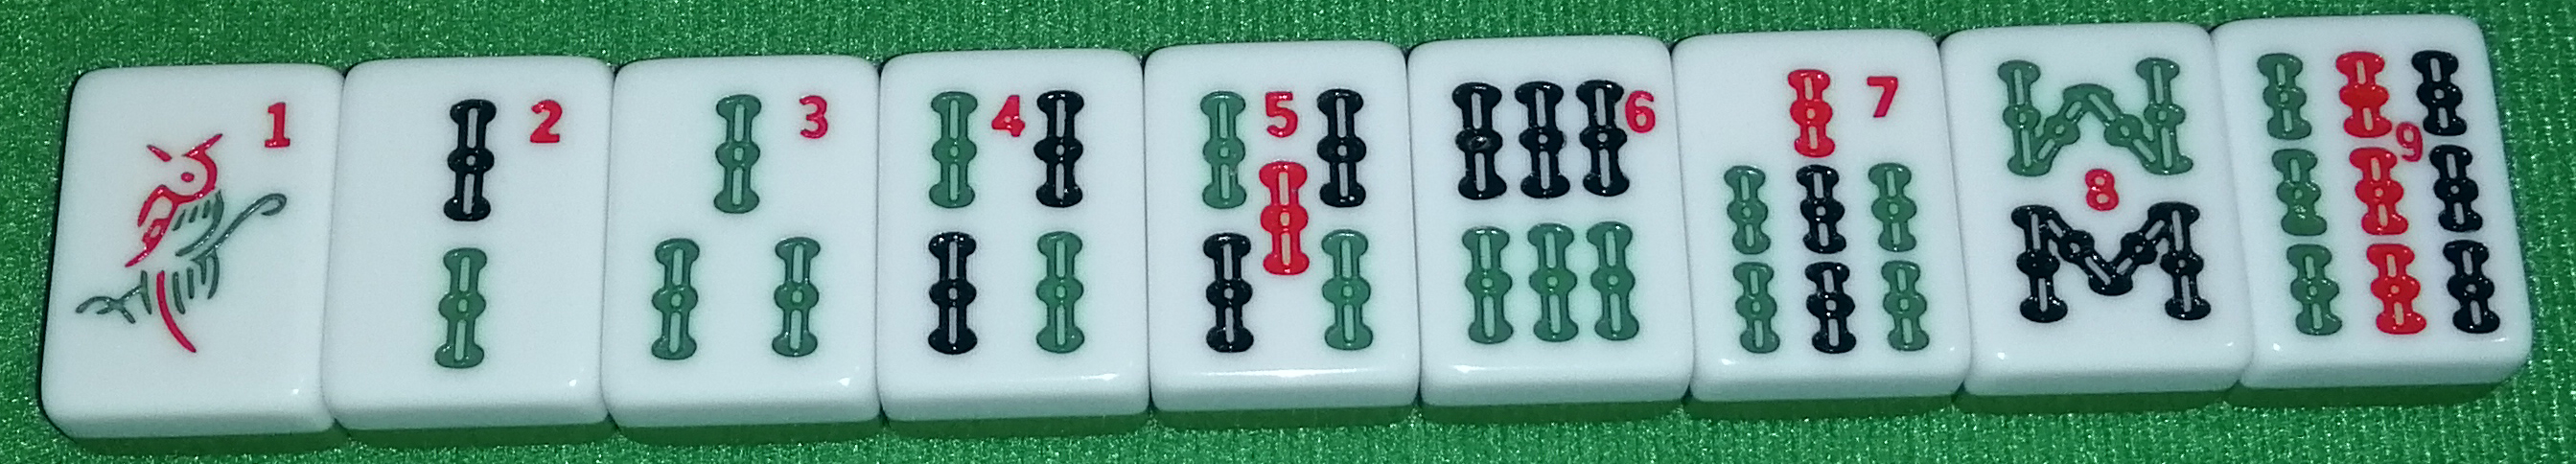 Nine sou tiles, numbered one through nine.